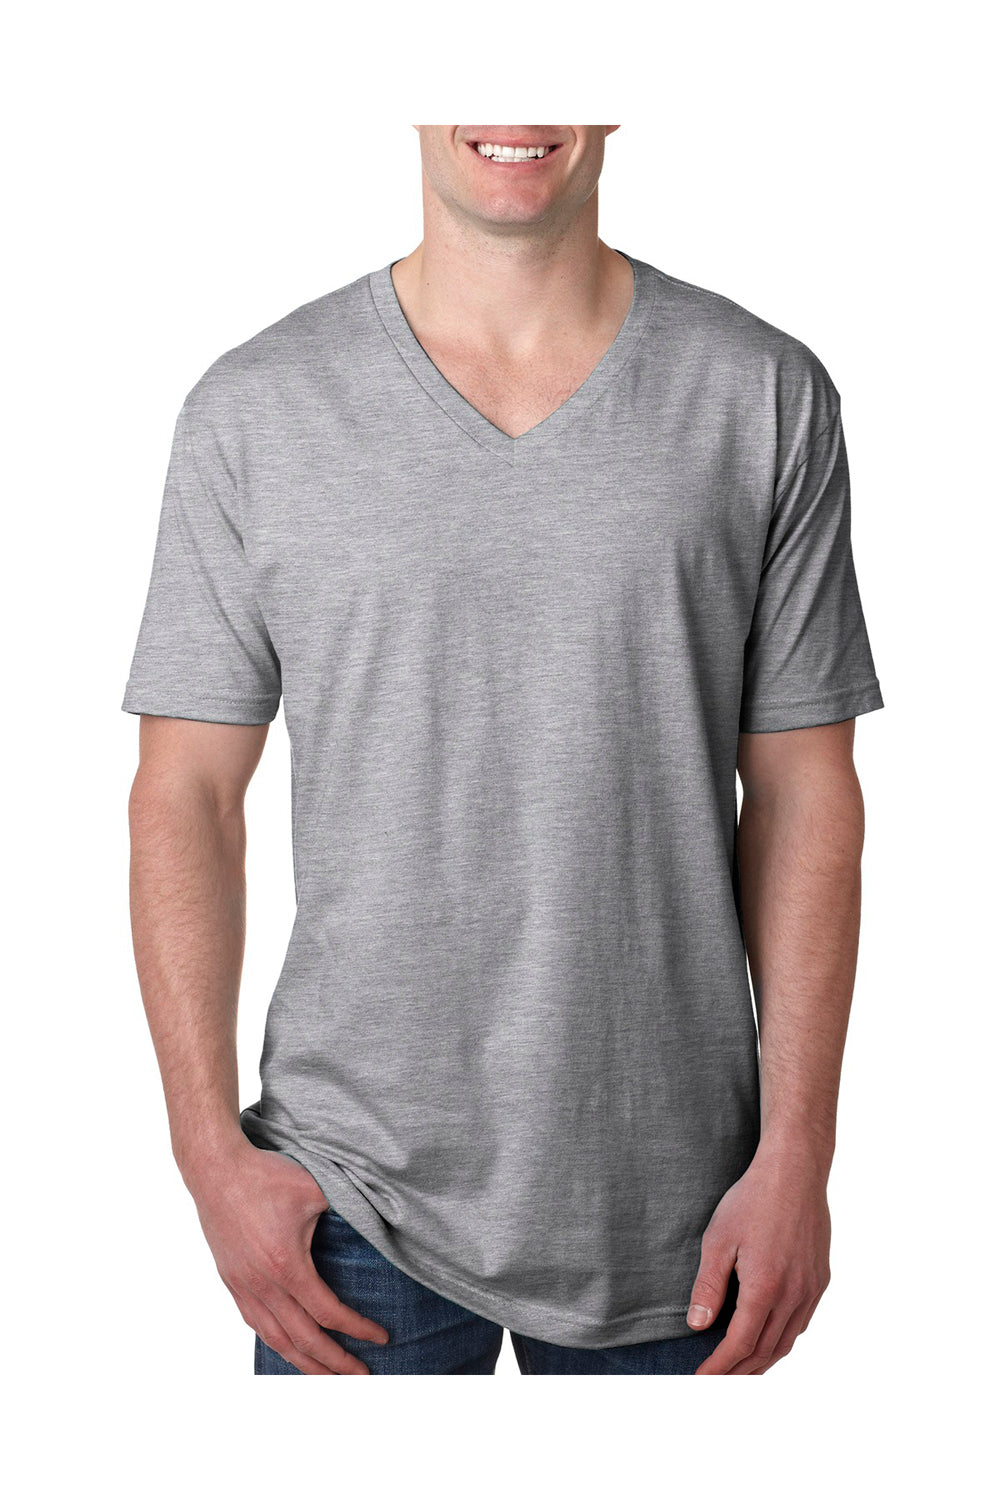 Next Level N3200 Mens Fine Jersey Short Sleeve V-Neck T-Shirt Heather Grey Front